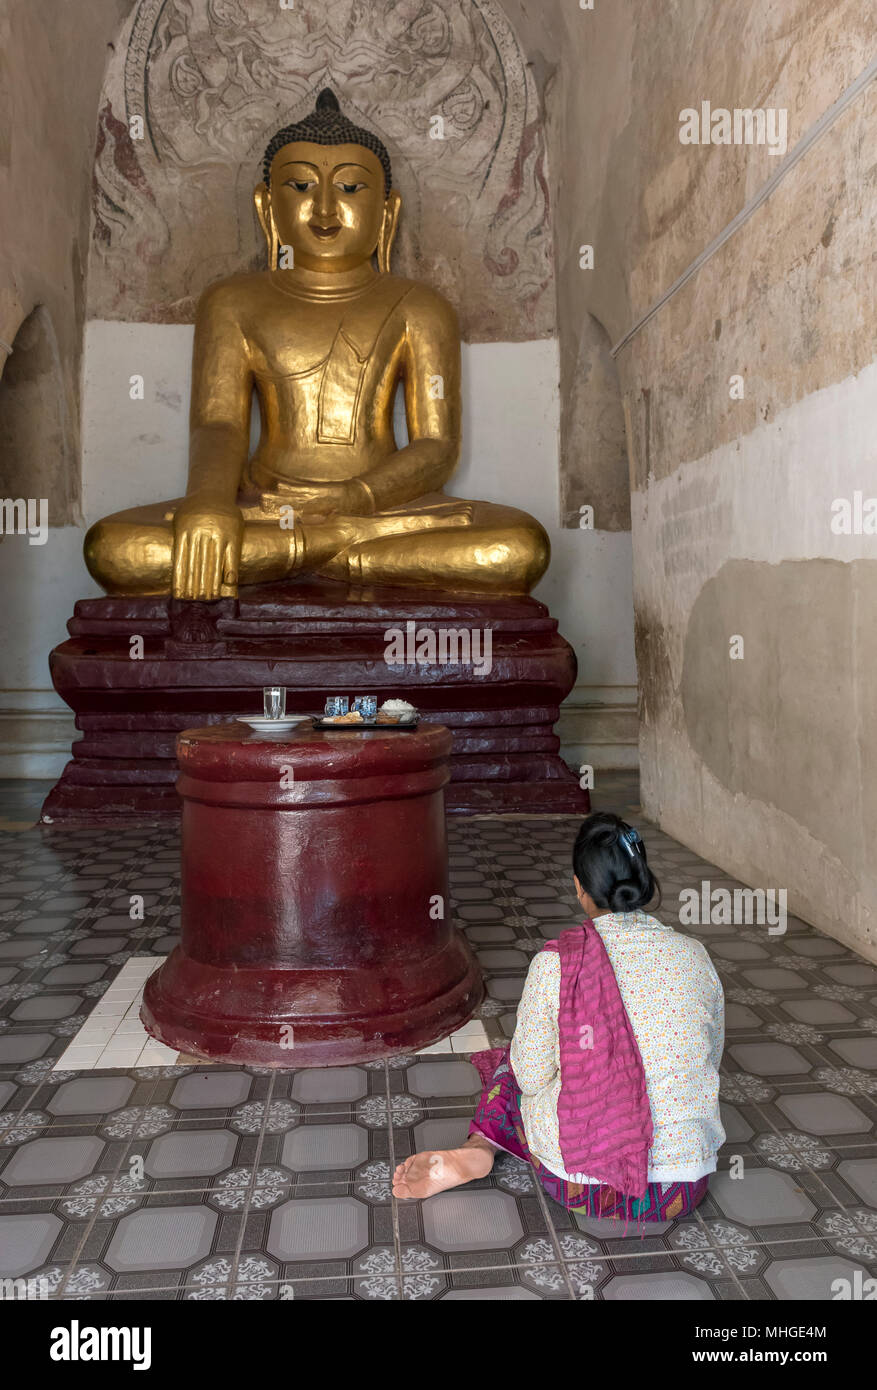 Statue de Bouddha au temple Gawdawpalin (Gaw Daw Palin Paya), Old Bagan, Myanmar (Birmanie) Banque D'Images